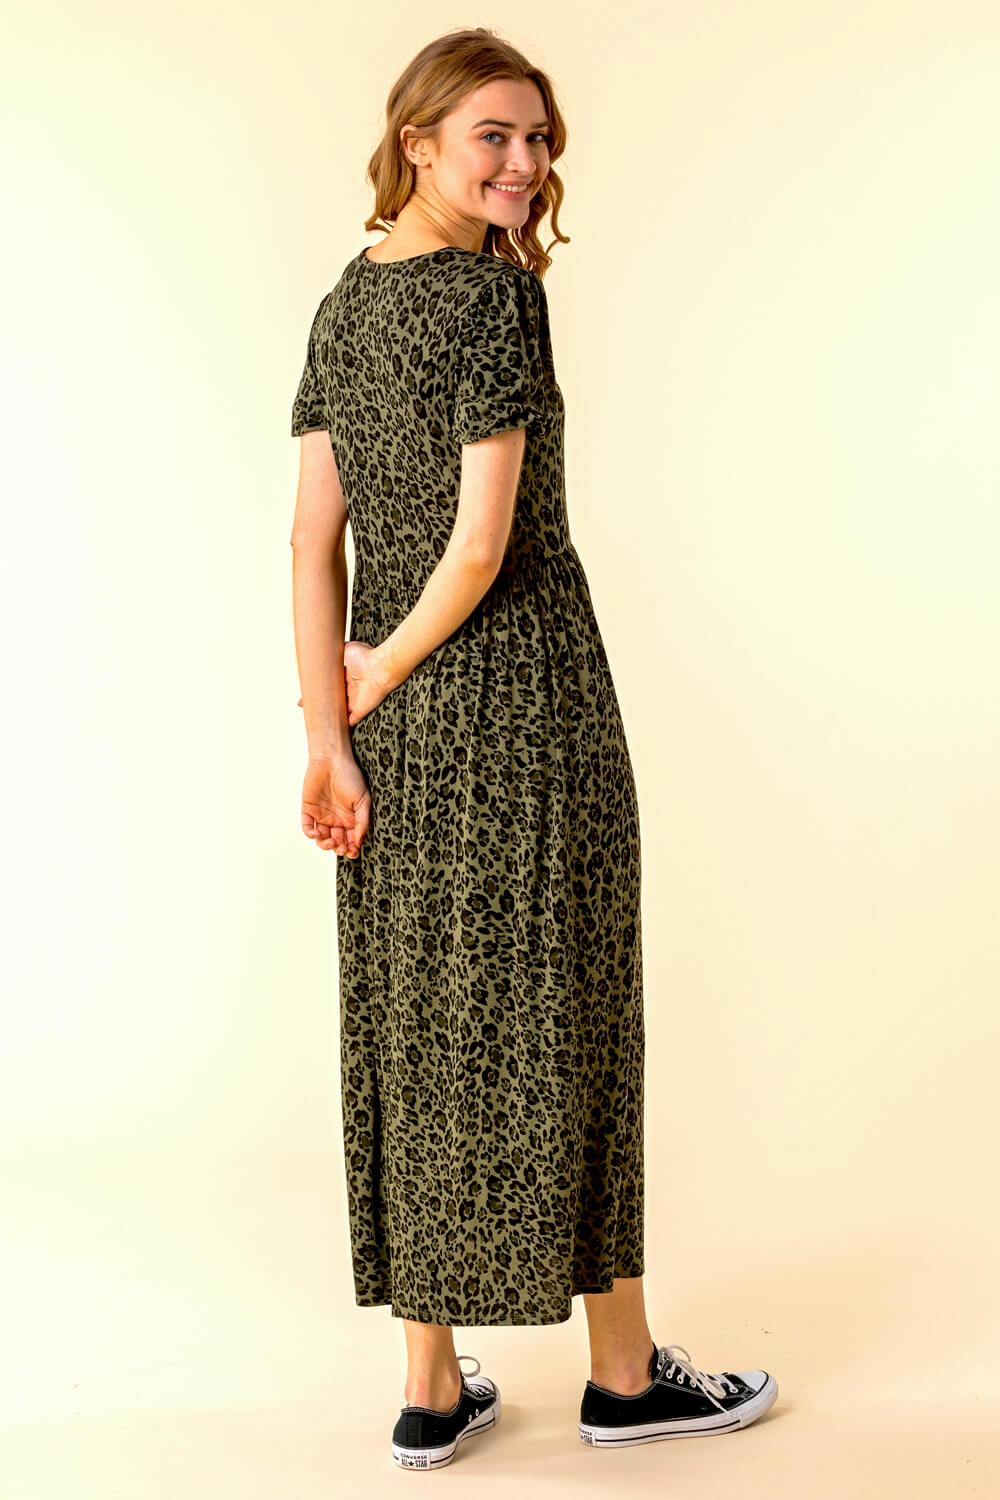 KHAKI Animal Print Midi Dress, Image 2 of 4